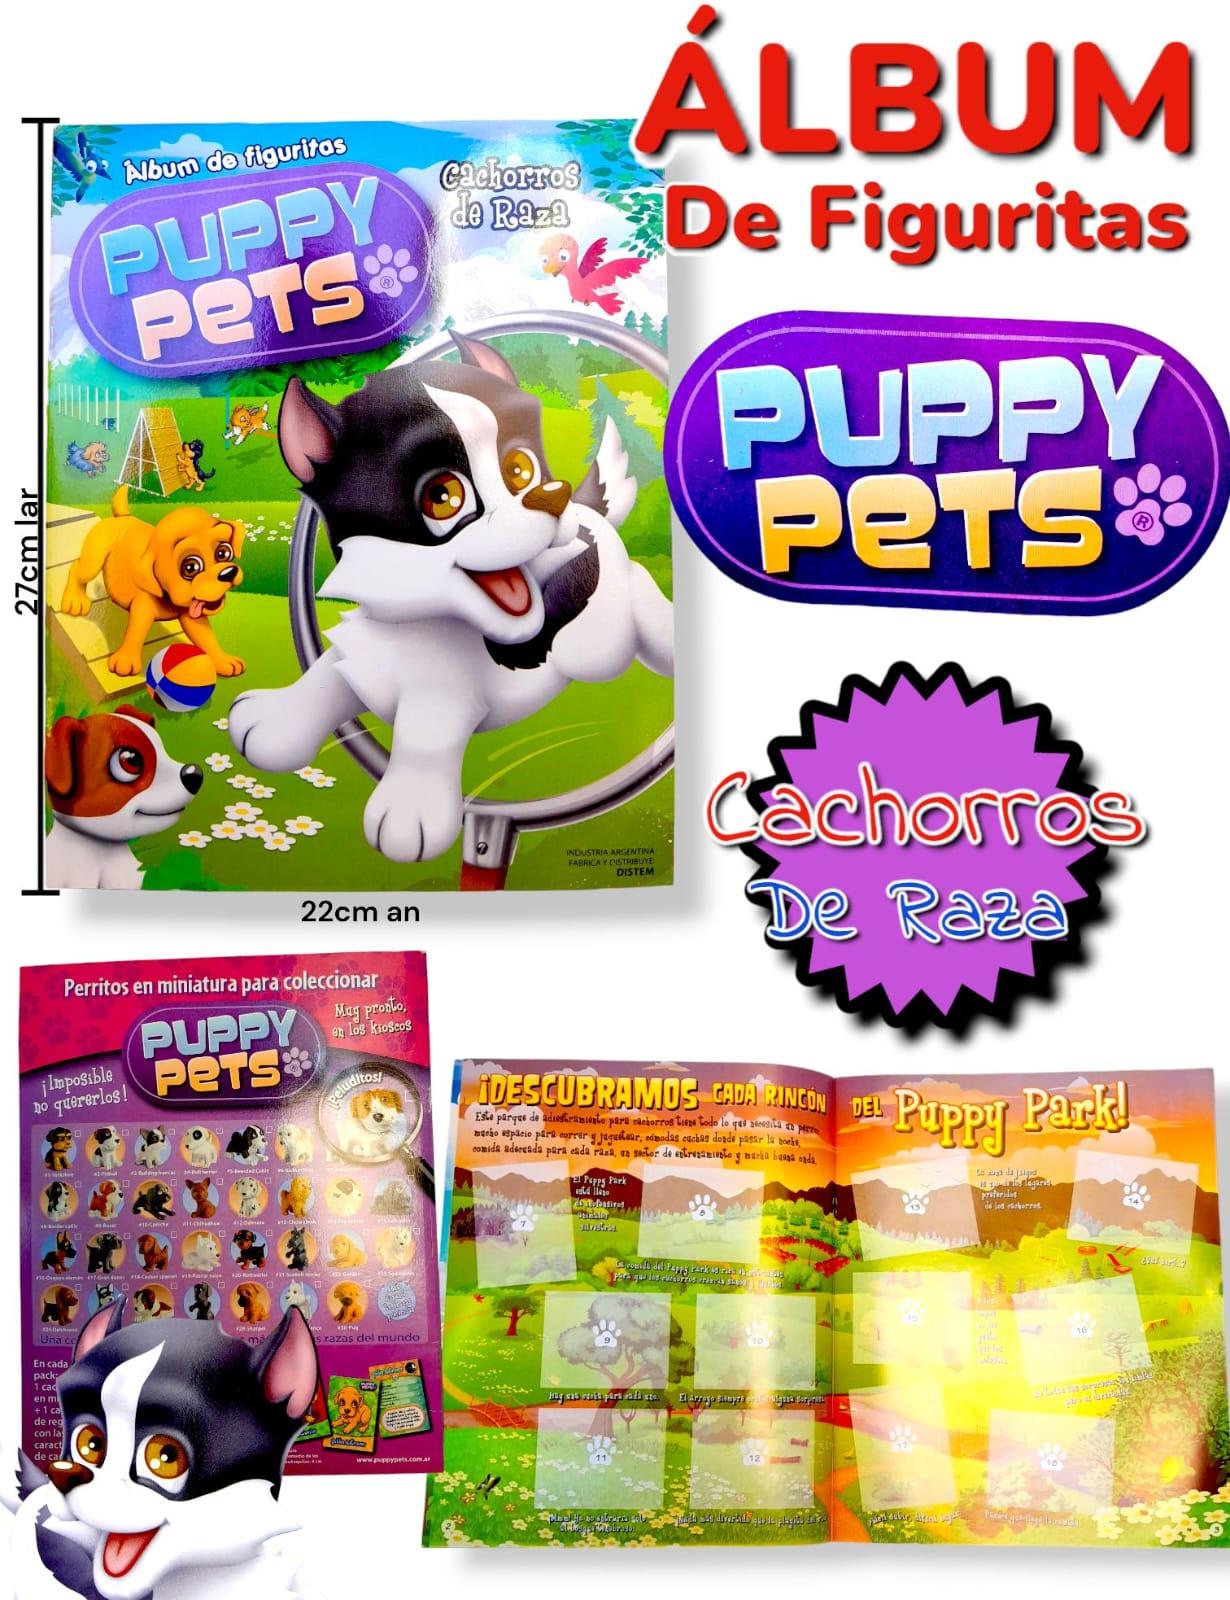 Album de Figuritas PUPPY PETS  